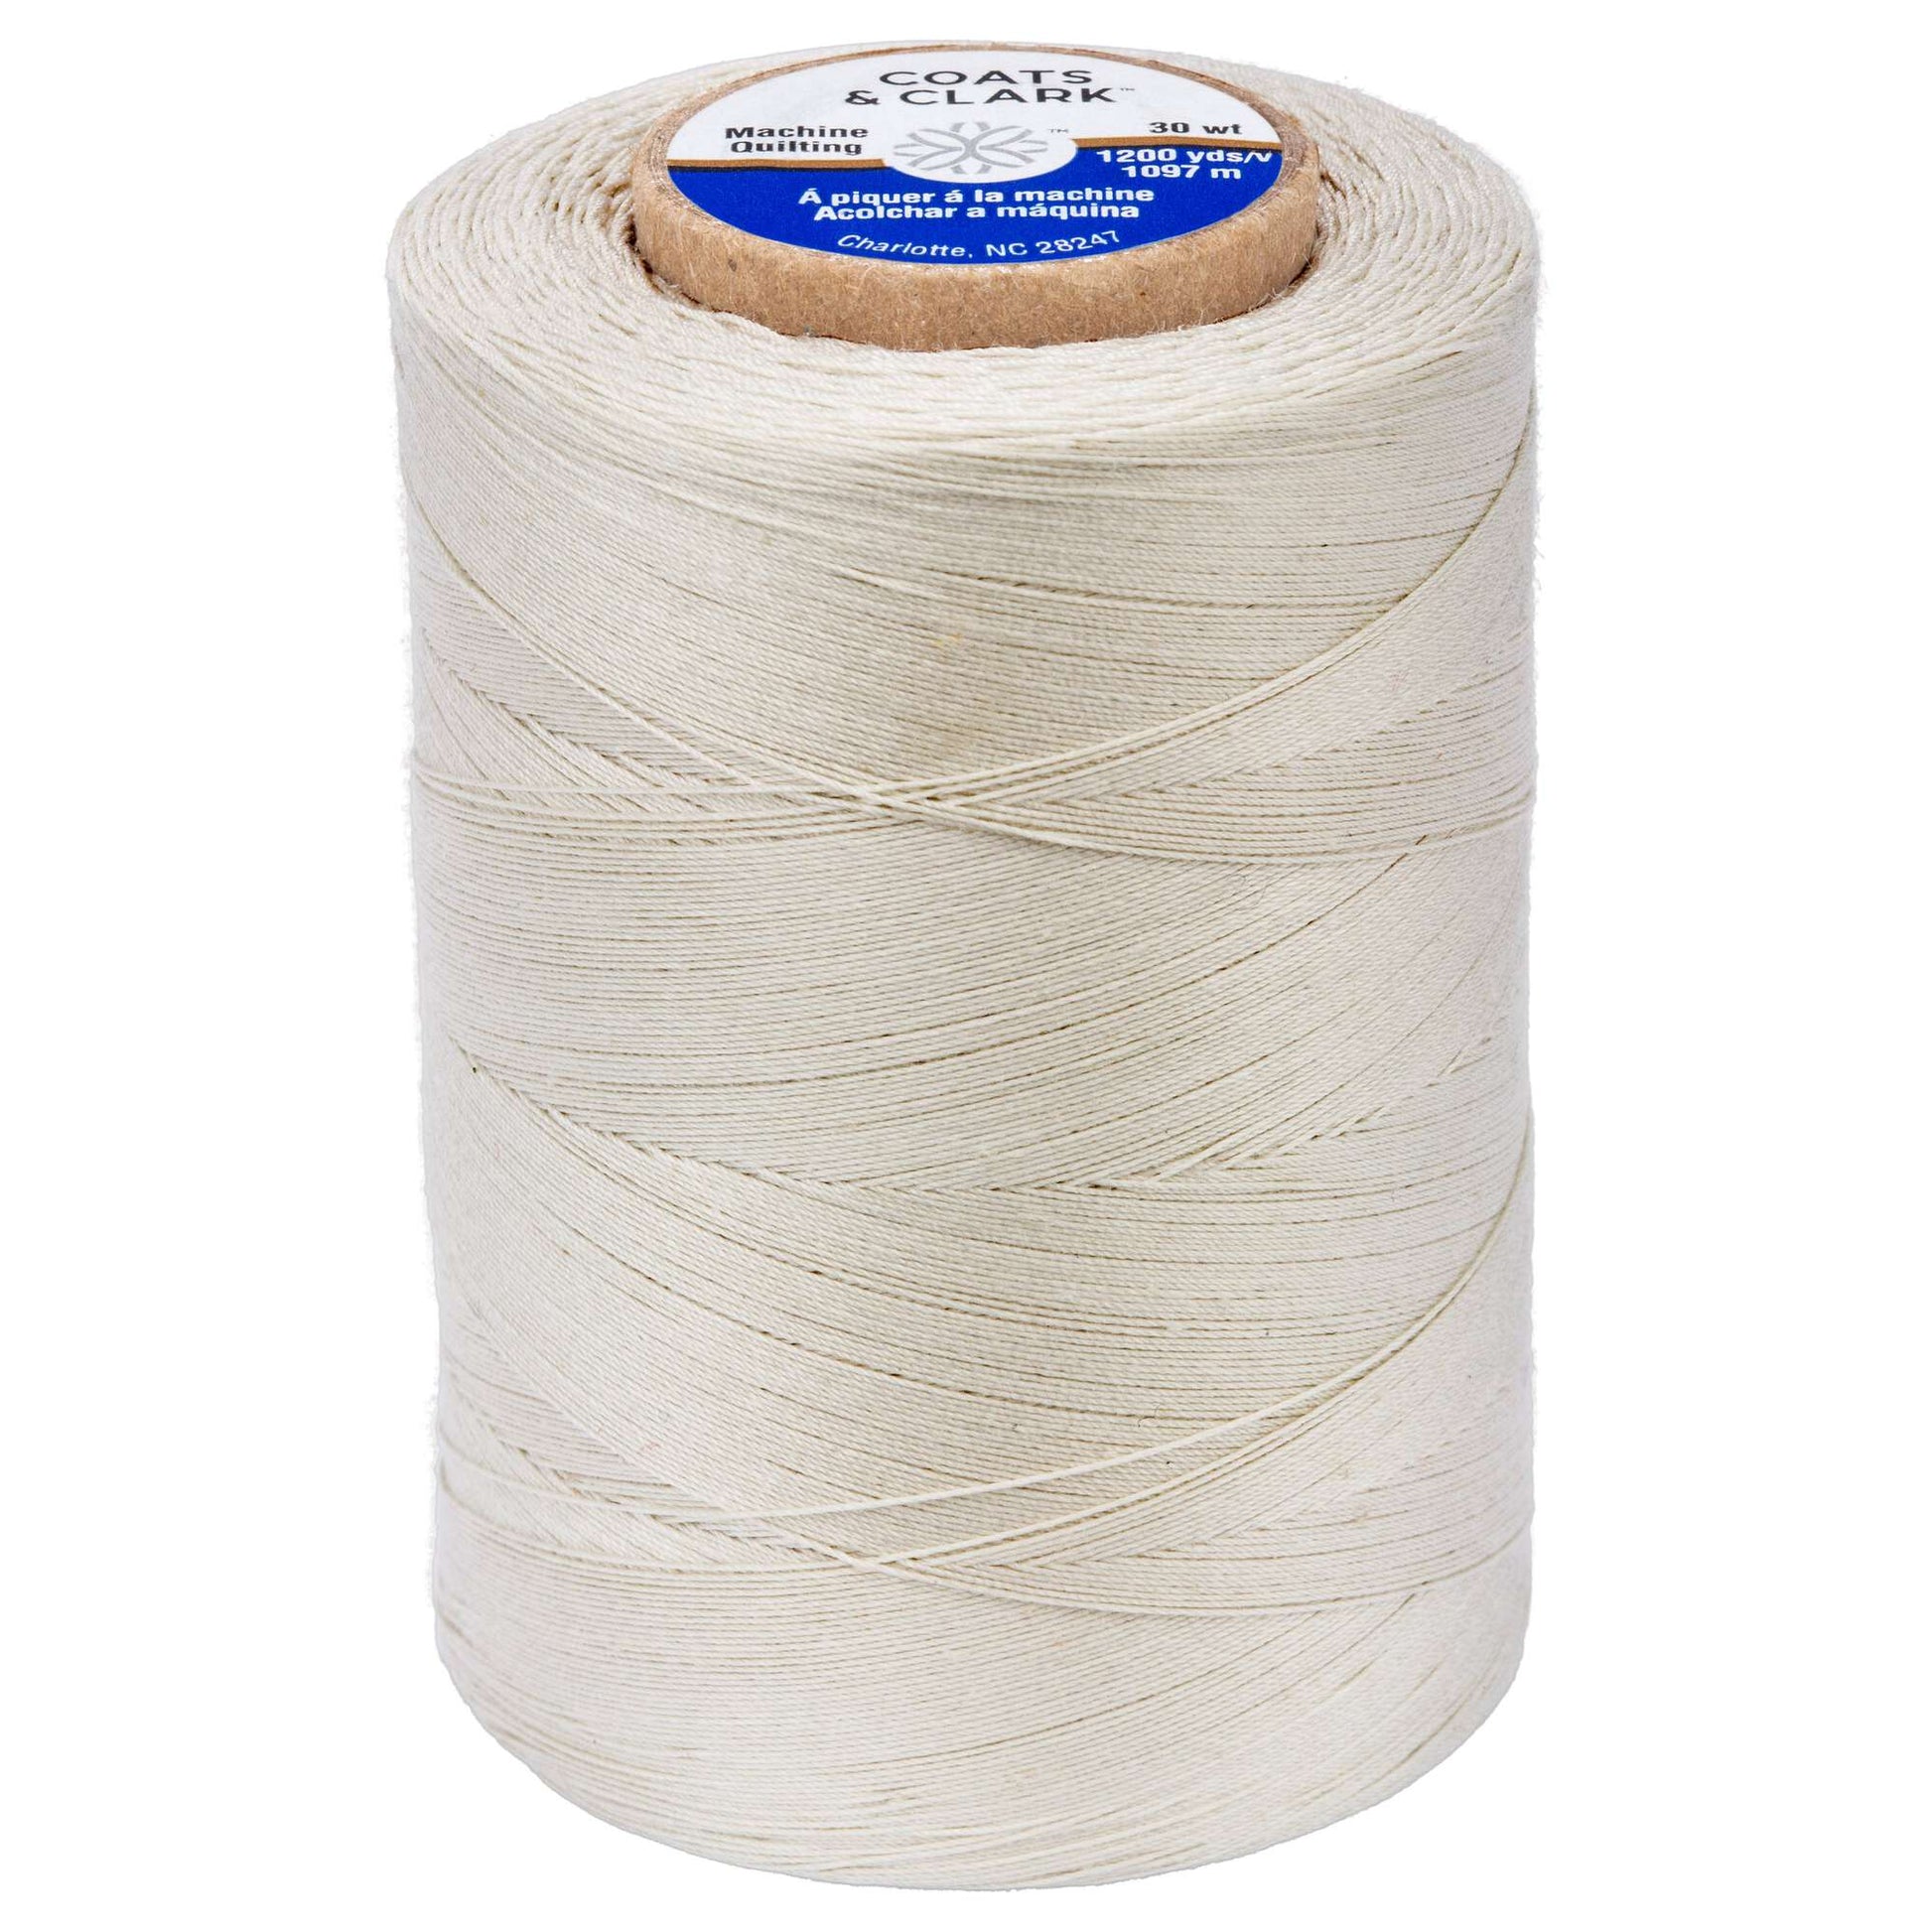 Coats & Clark Cotton Machine Quilting Thread (1200 Yards) Silver